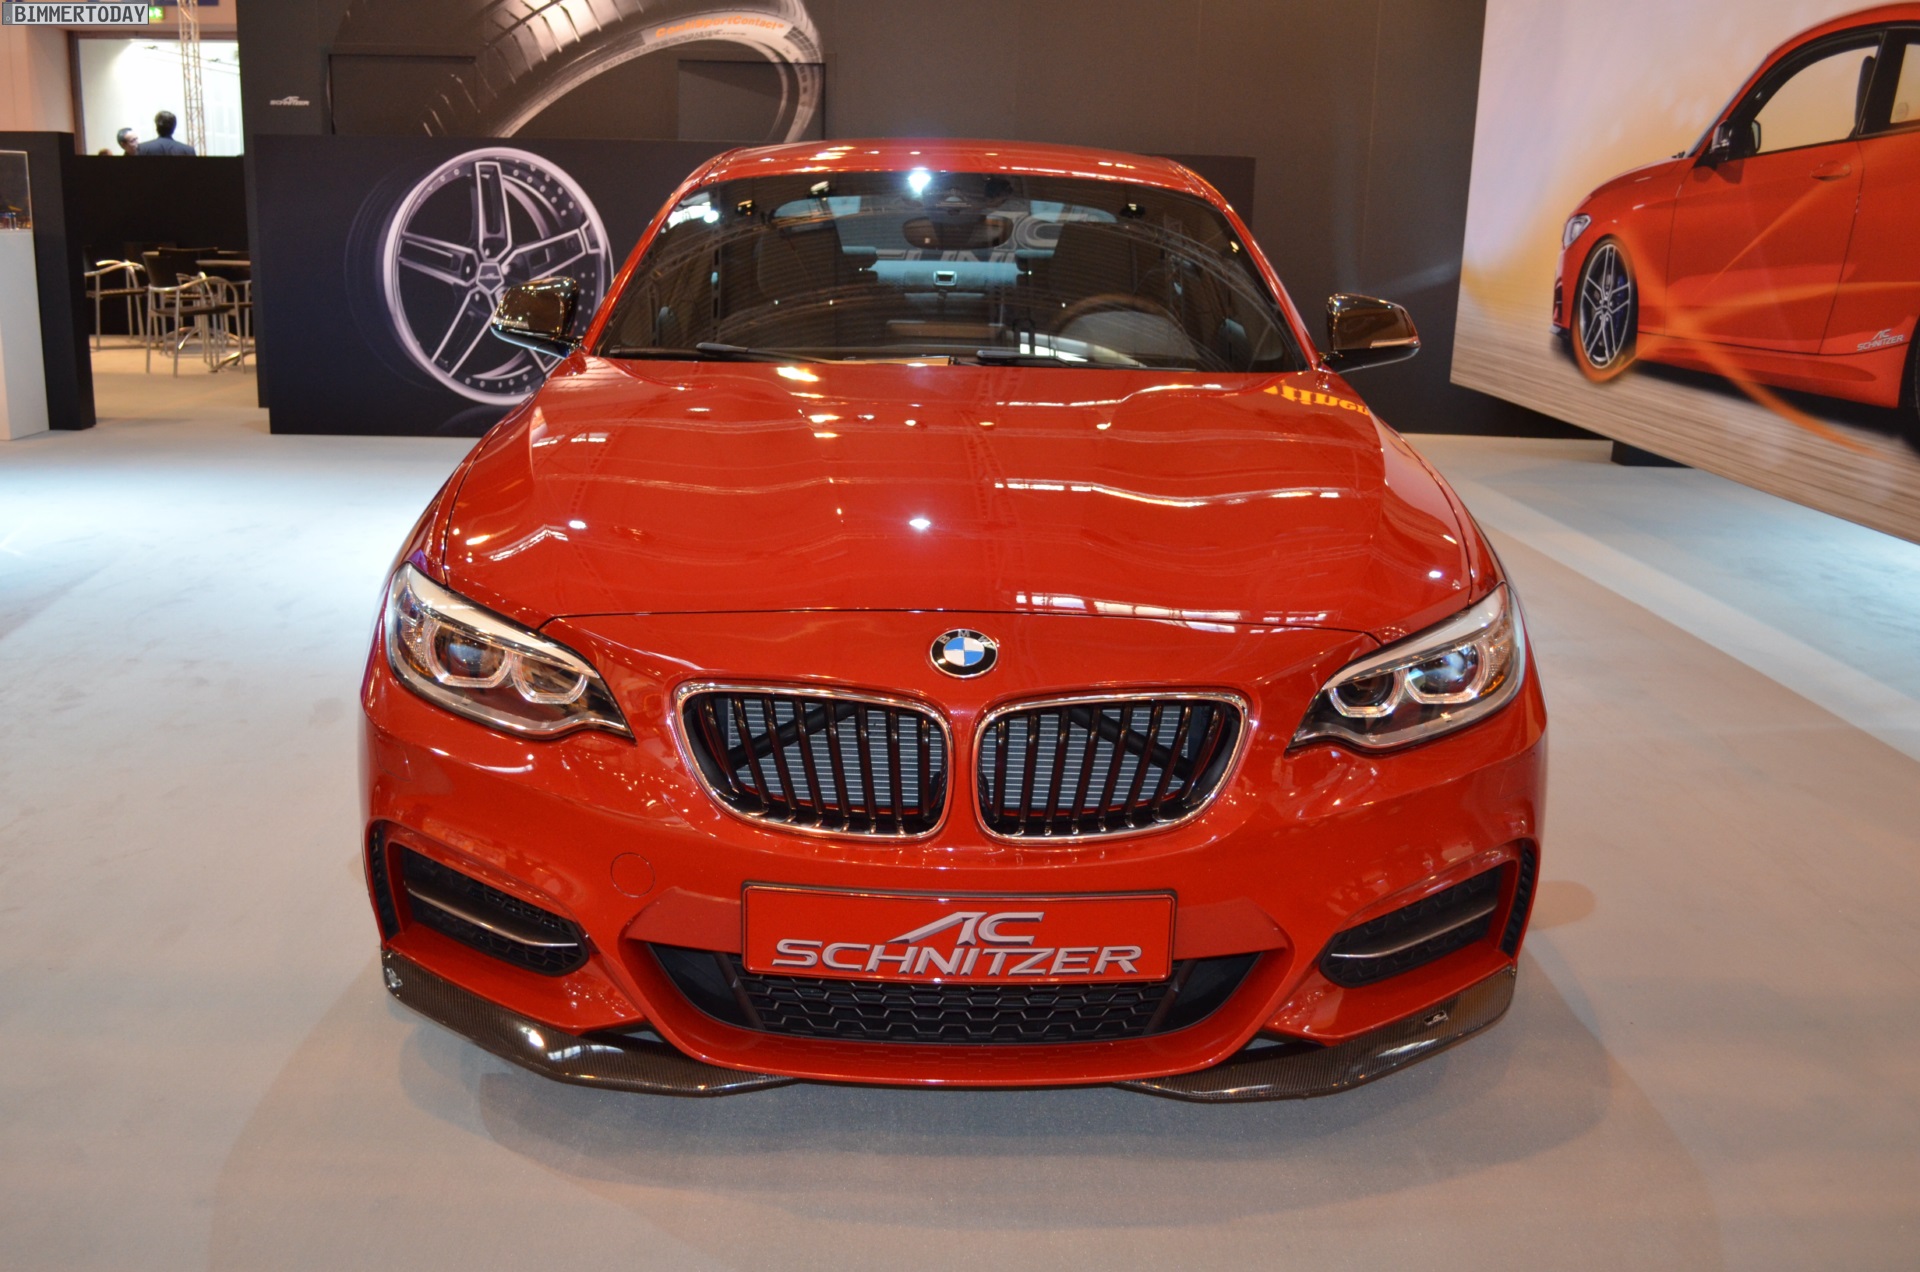 AC Schnitzer BMW M235i Tuning F22 Essen Motor Show 2014 06